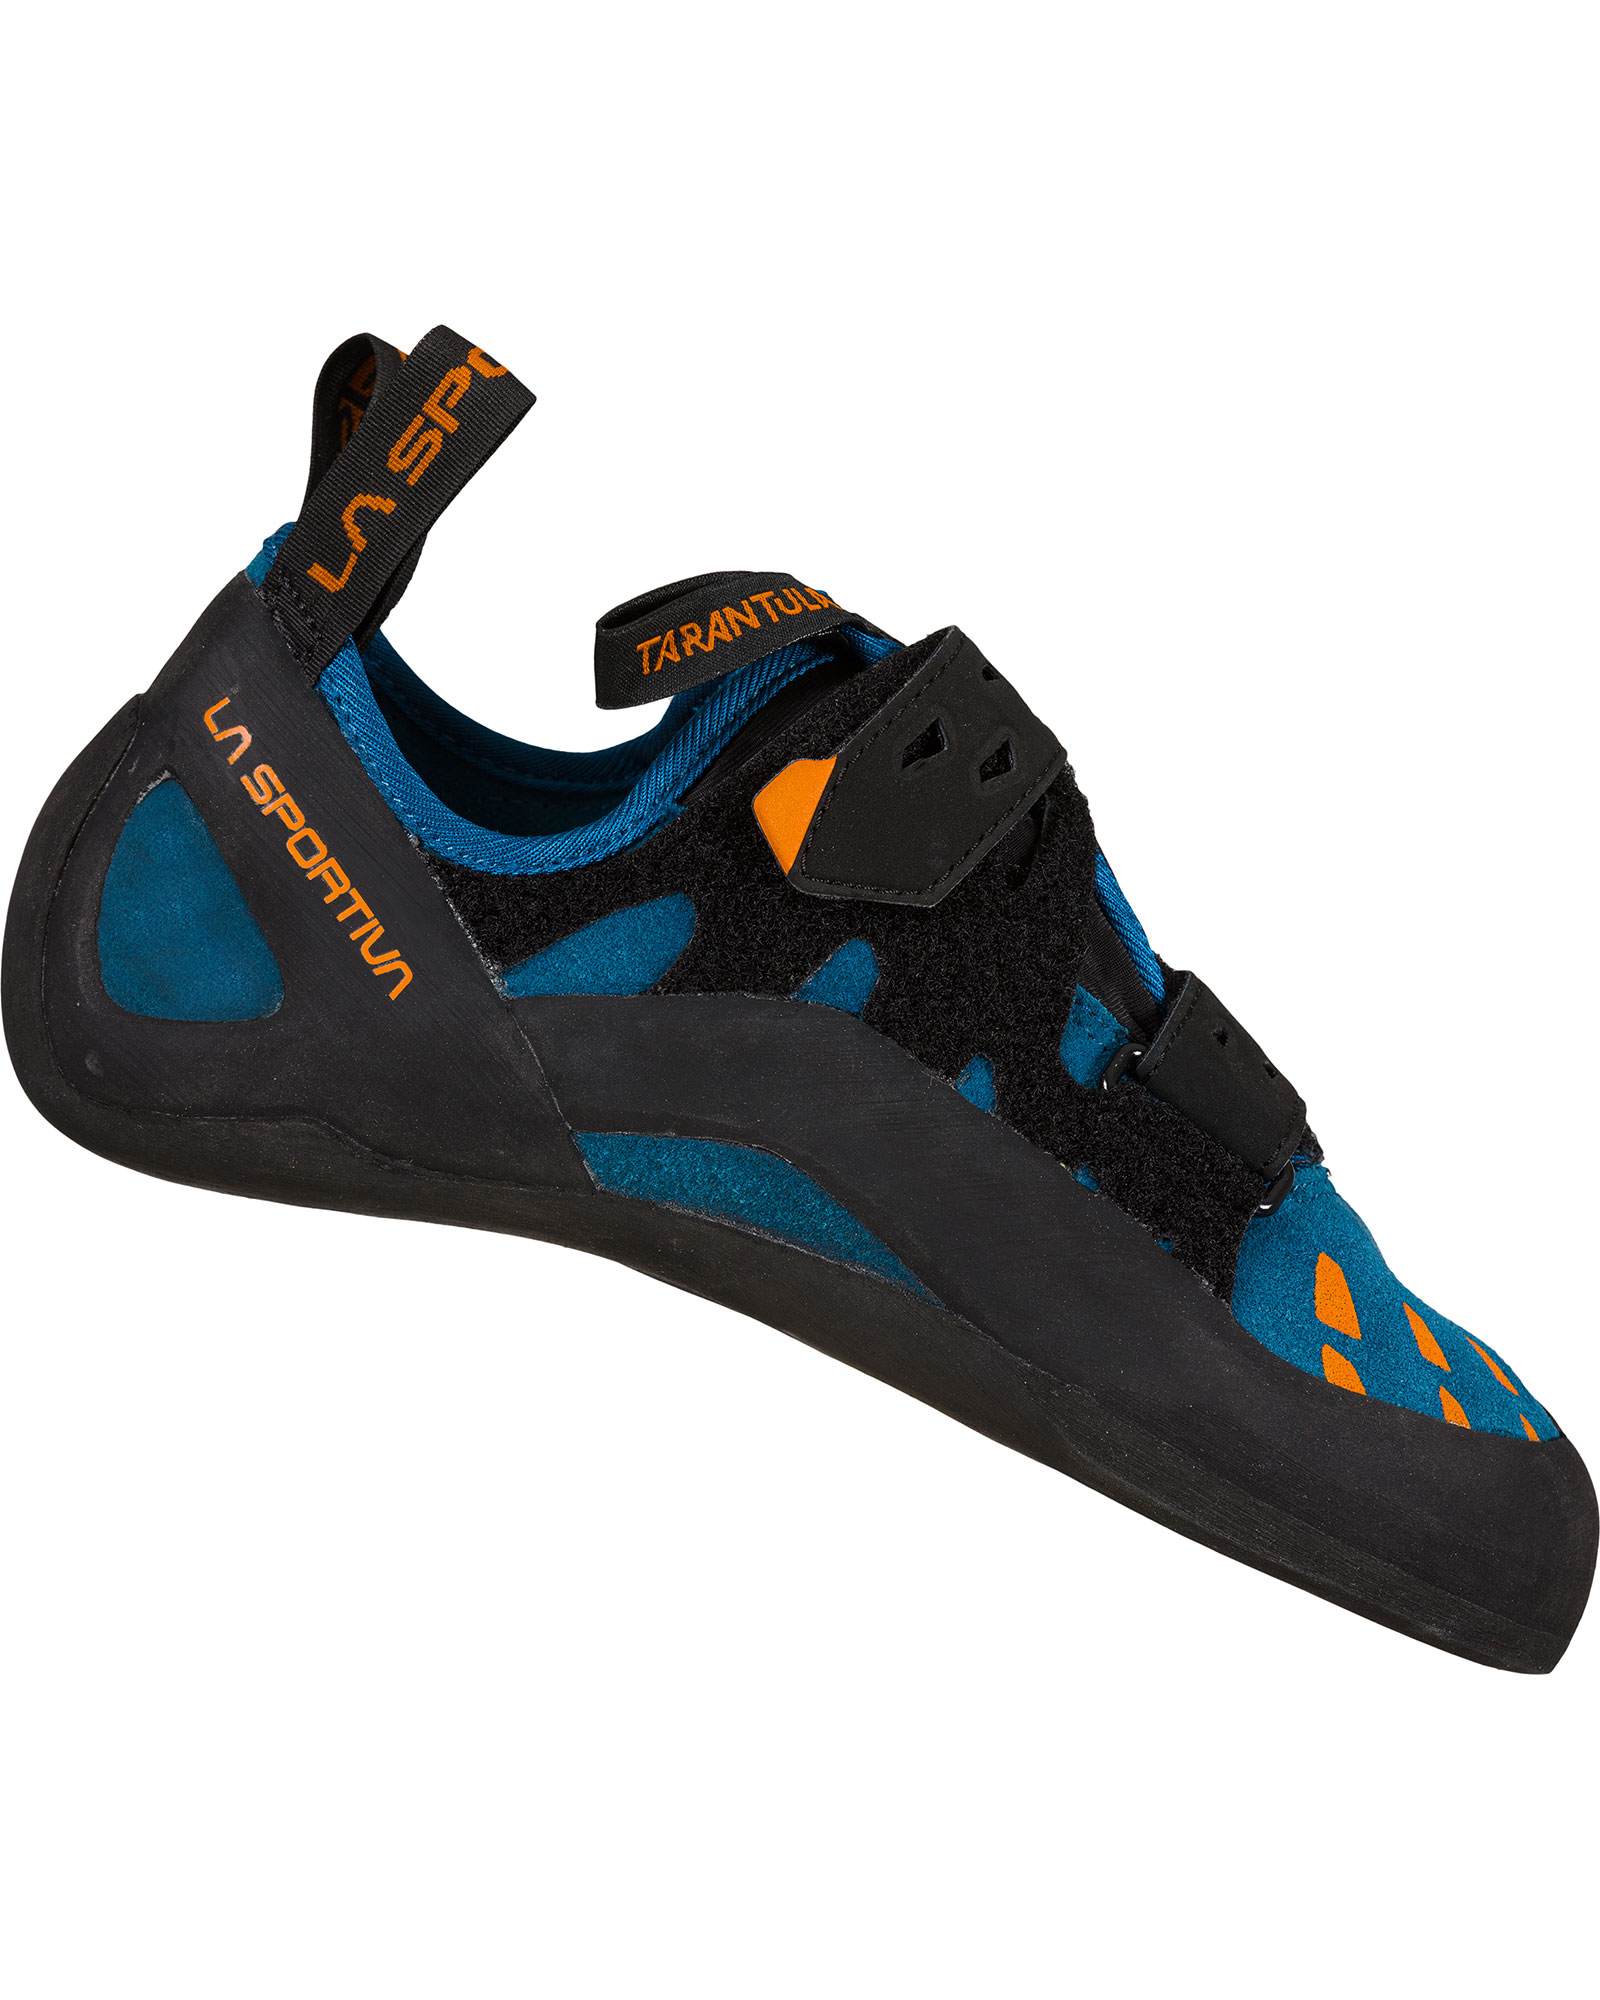 La Sportiva Tarantula Men’s Shoes - Space Blue/Maple EU 45